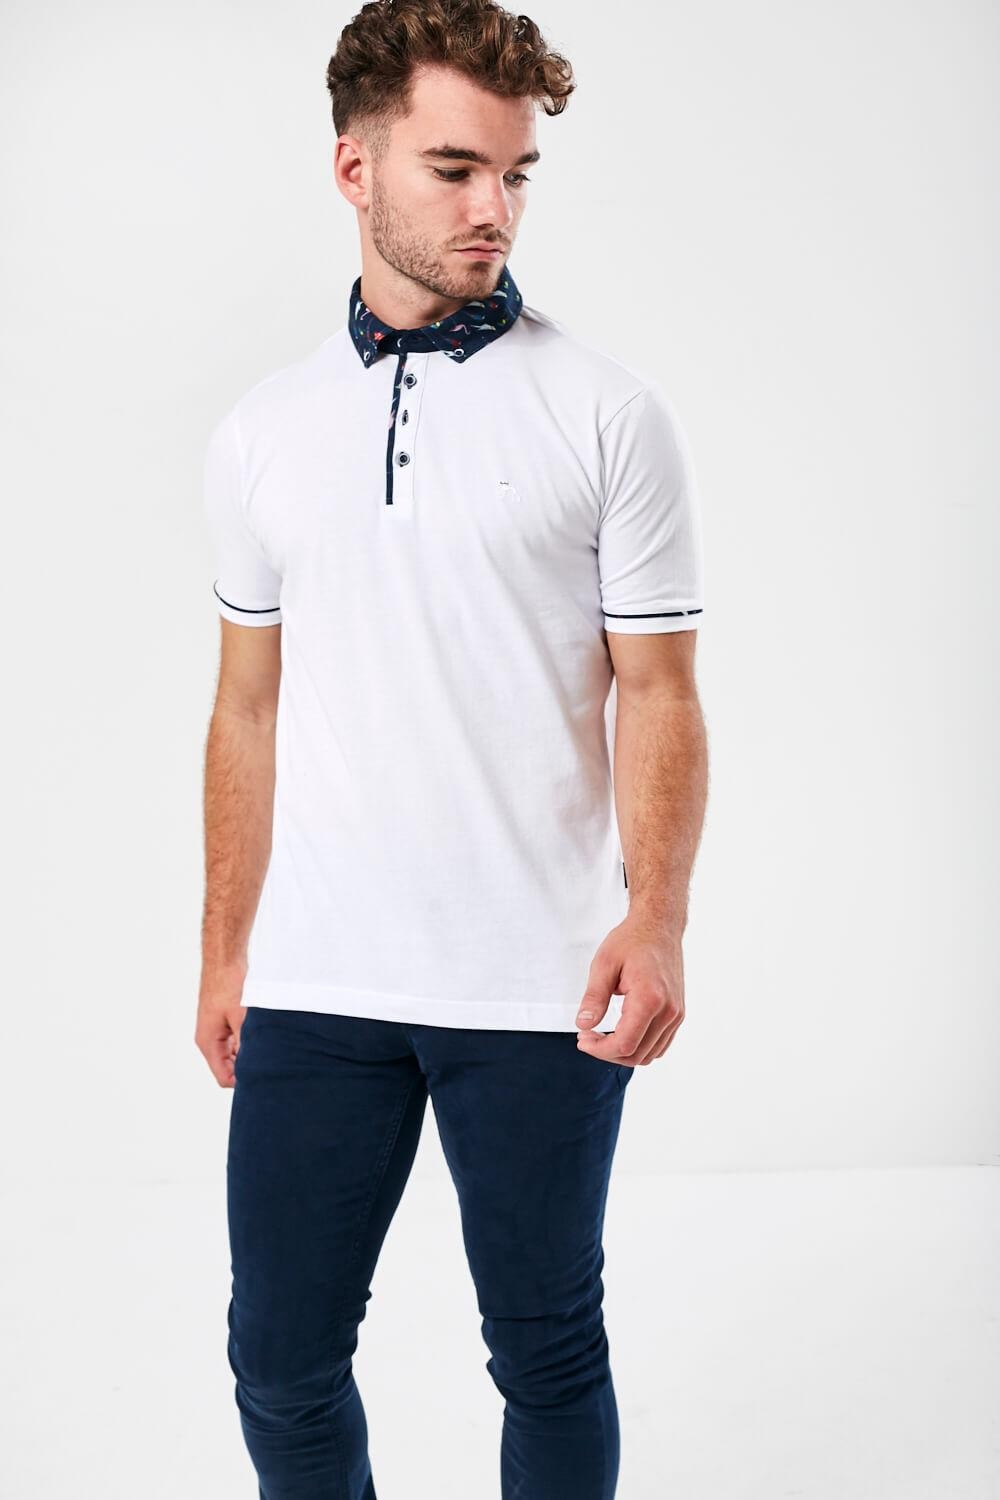 Bewley Ritch Edmo Short Sleeve Polo Shirt in White | iCLOTHING